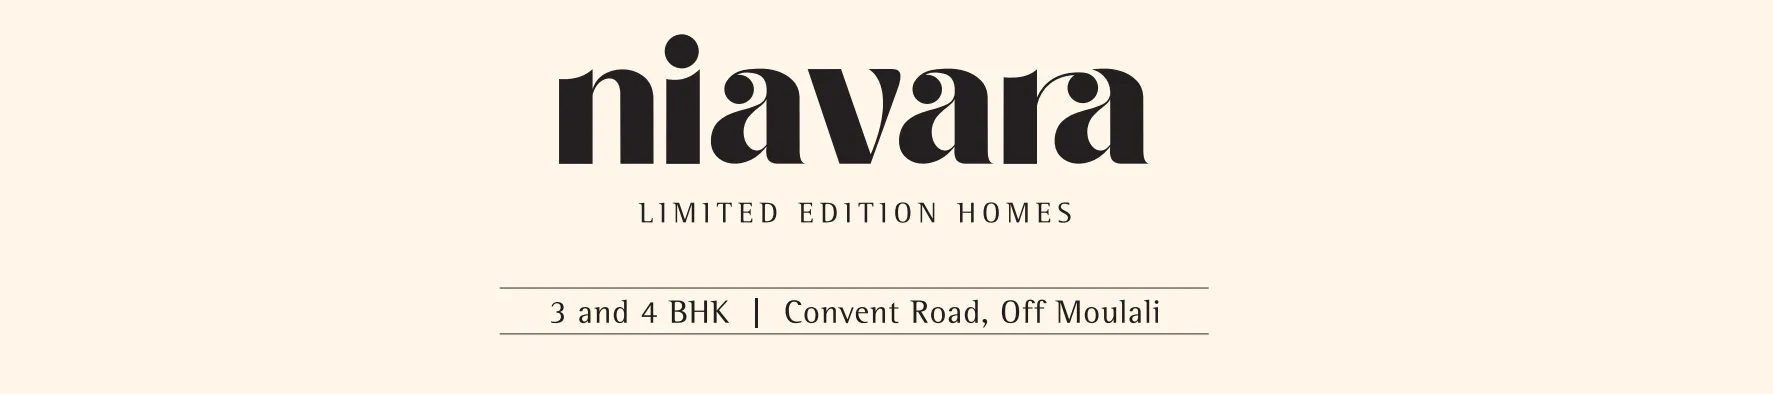 Niavara:3bhk flat for sale